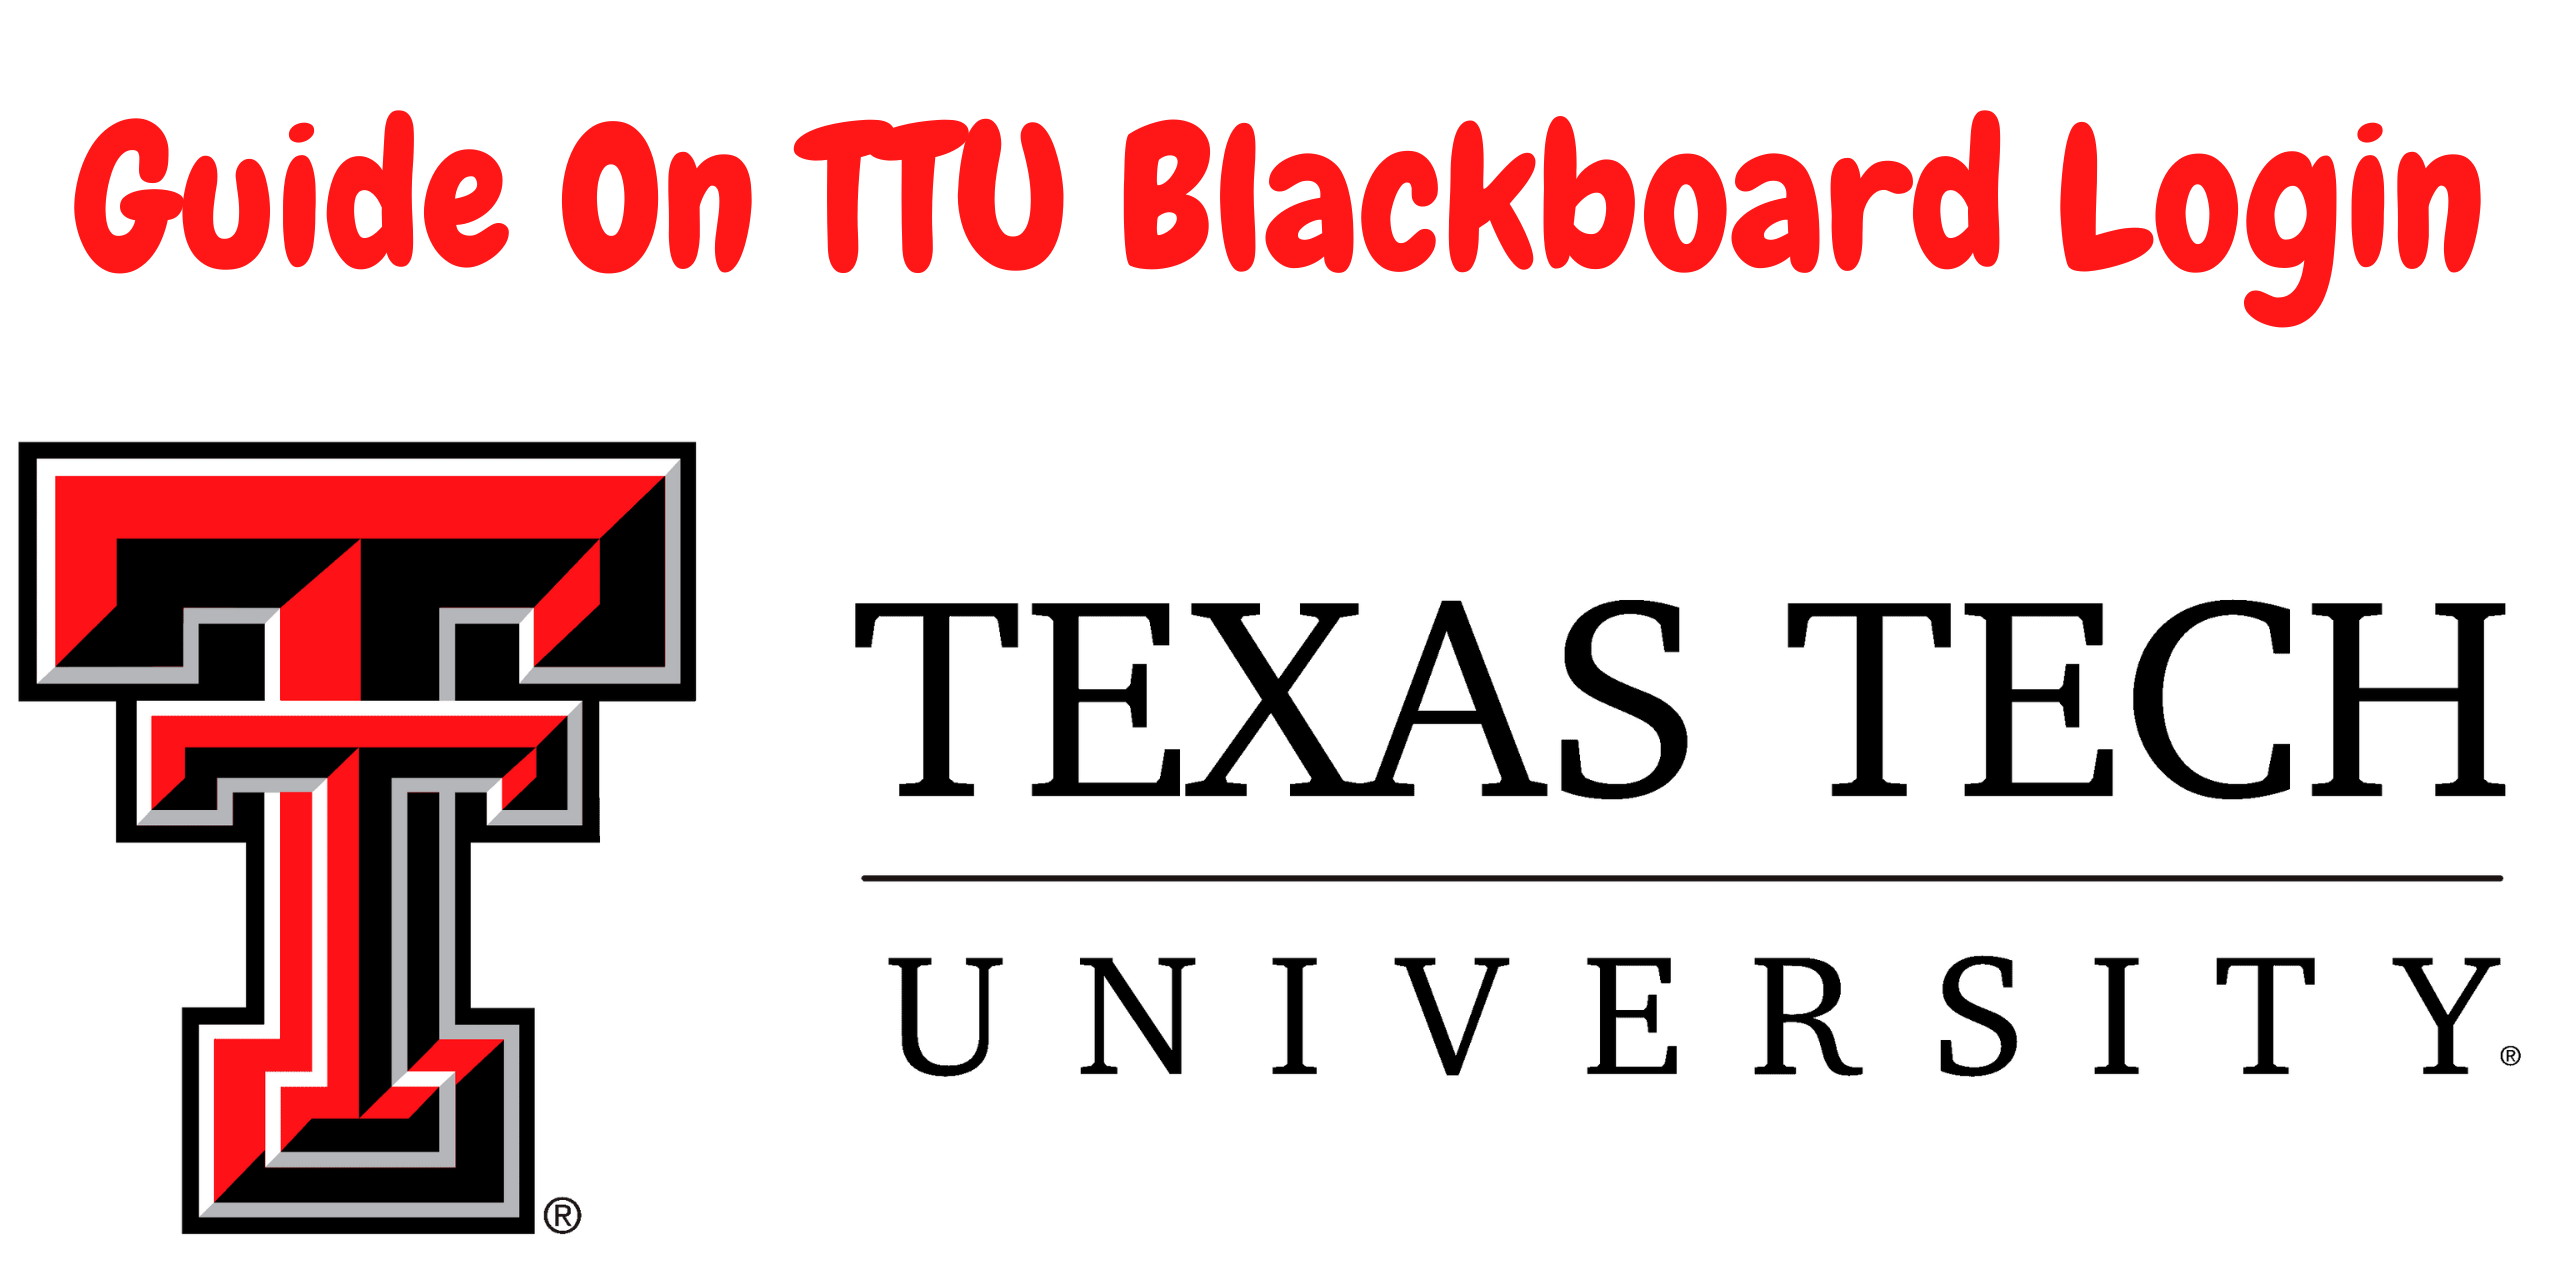 ttu blackboard